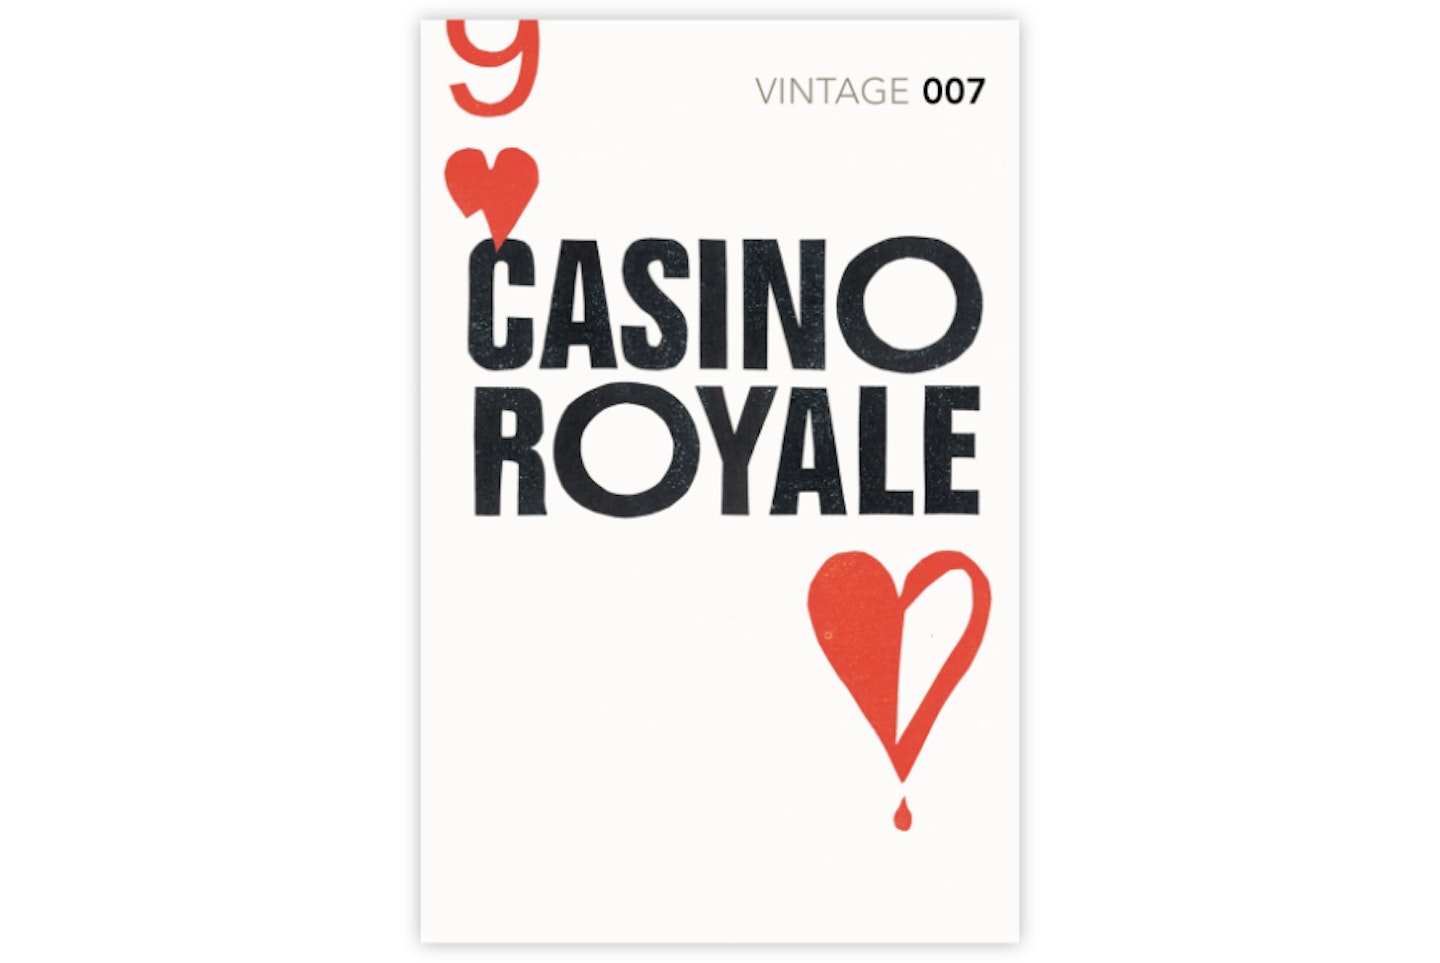 Ian Fleming's Casino Royale